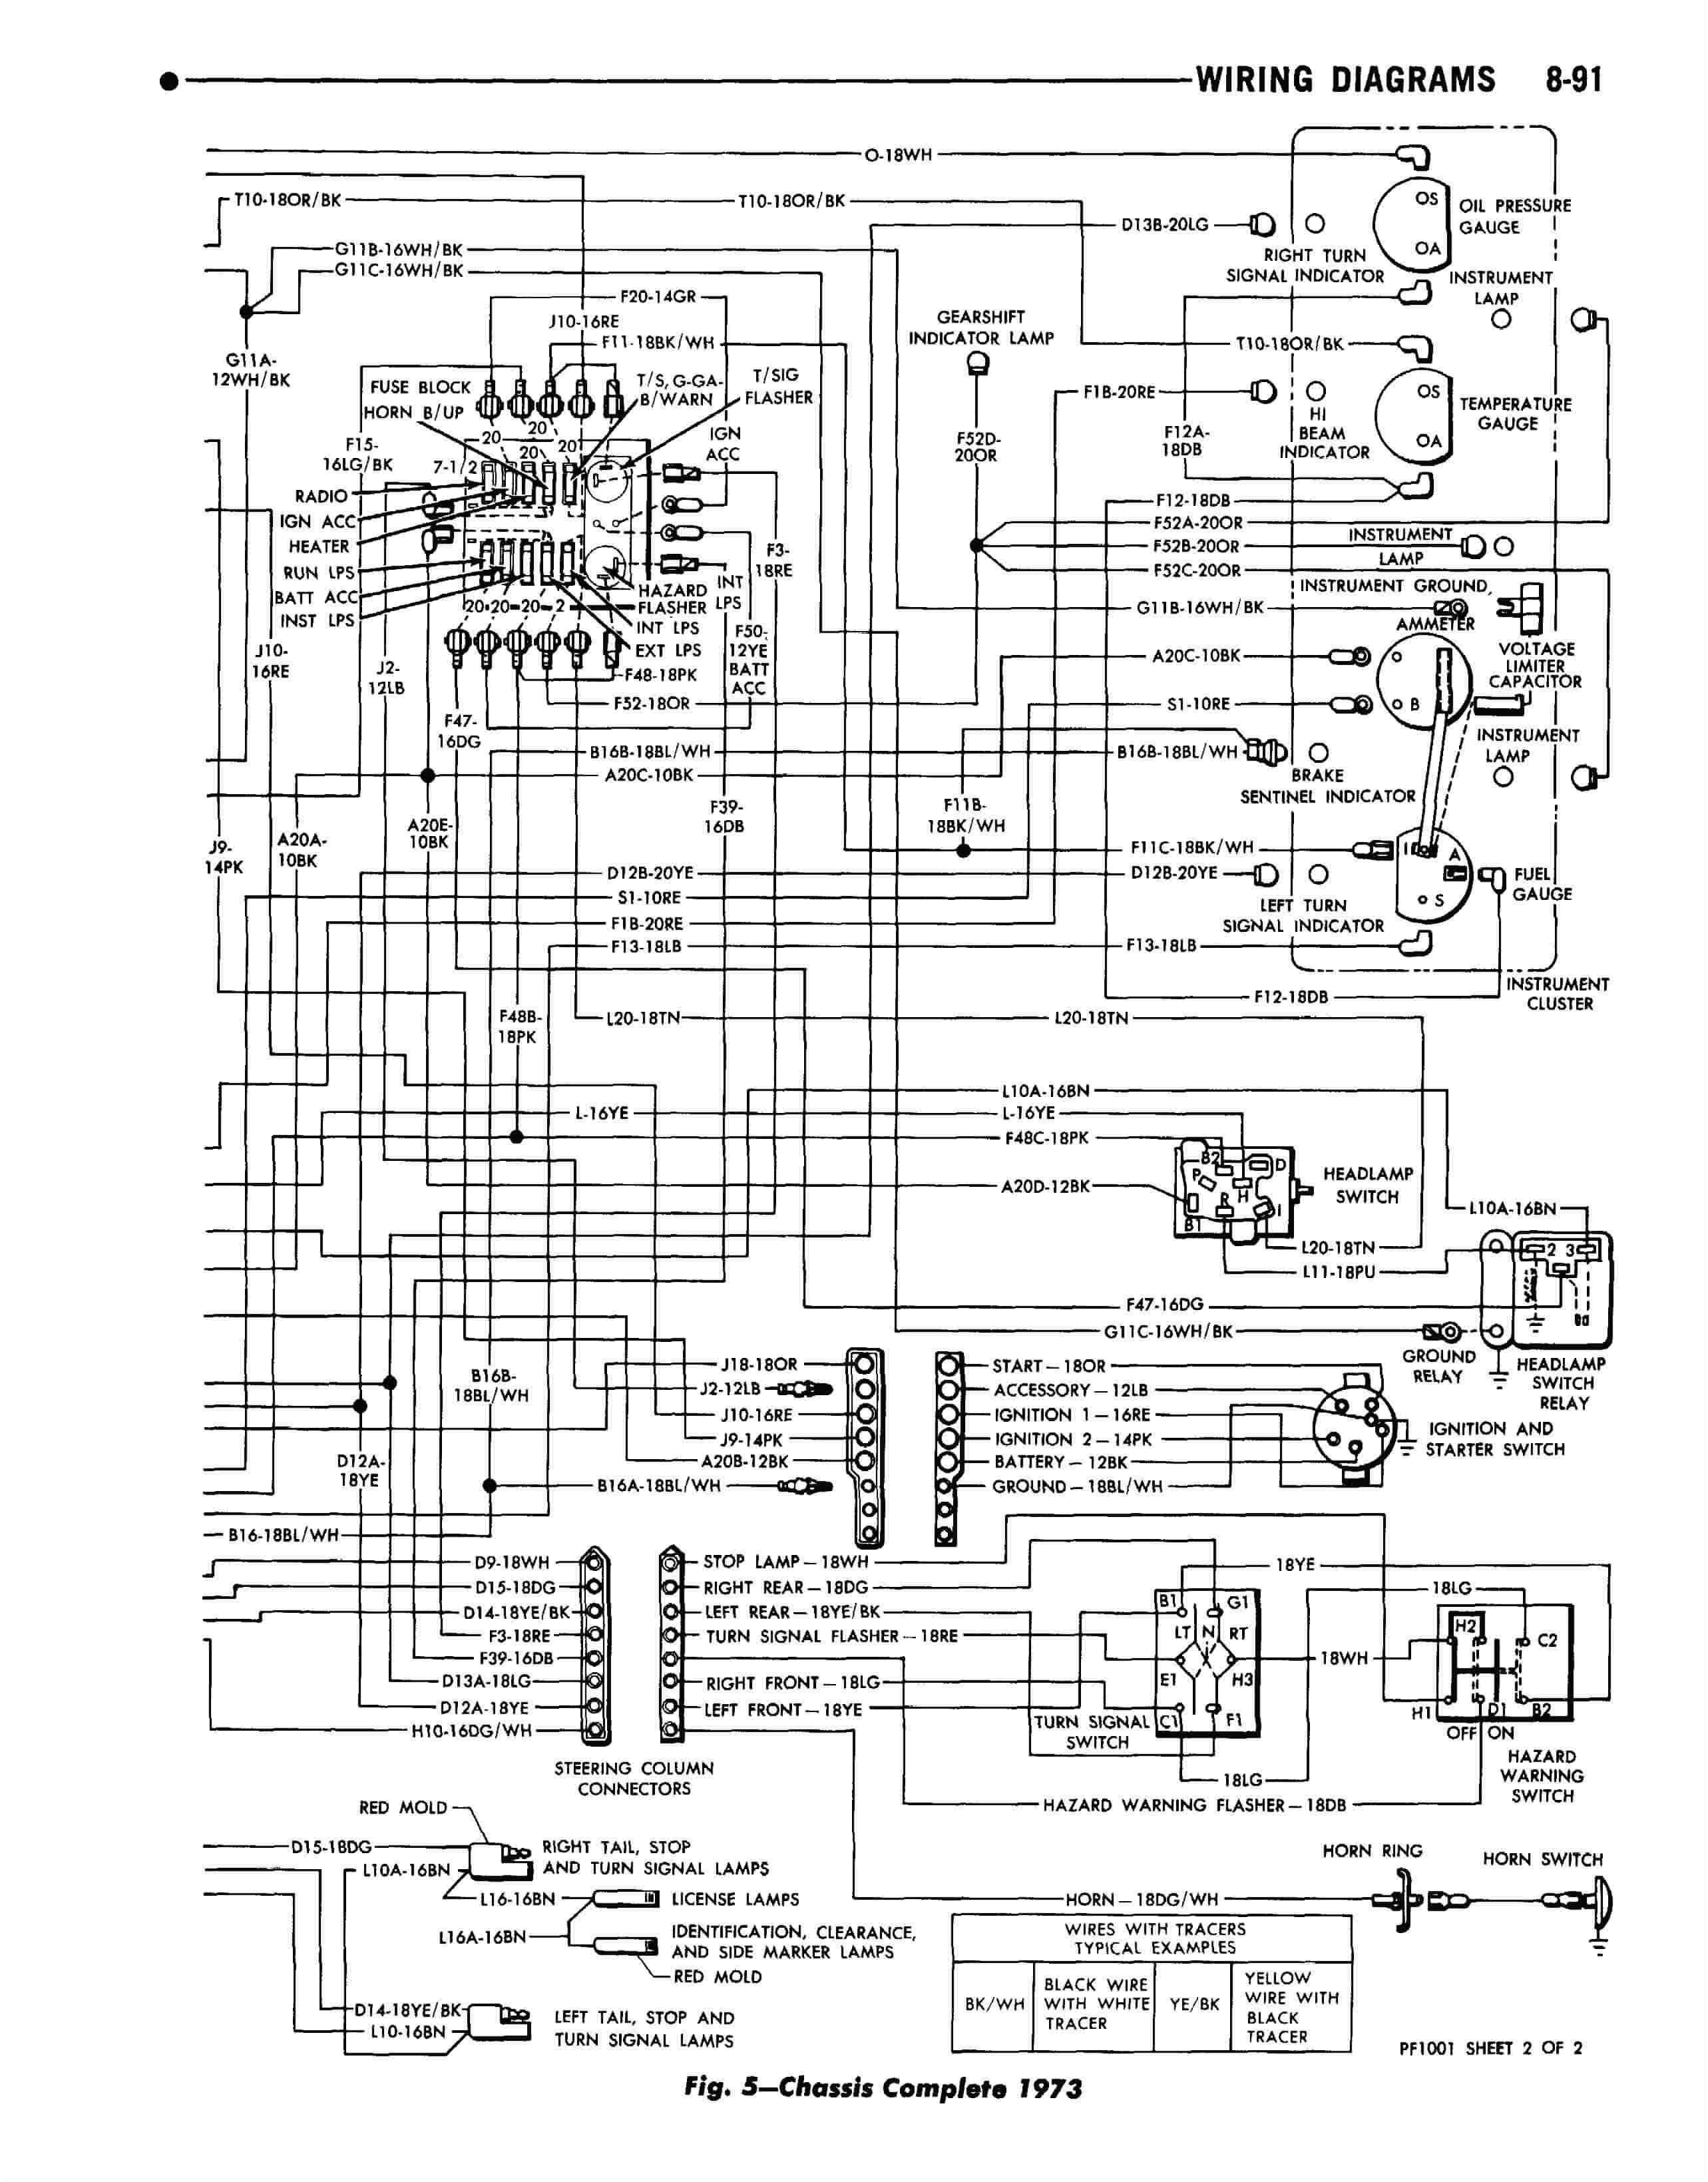 fleetwood motorhome wiring diagram fuse fresh fleetwood motorhome wiring diagram collection